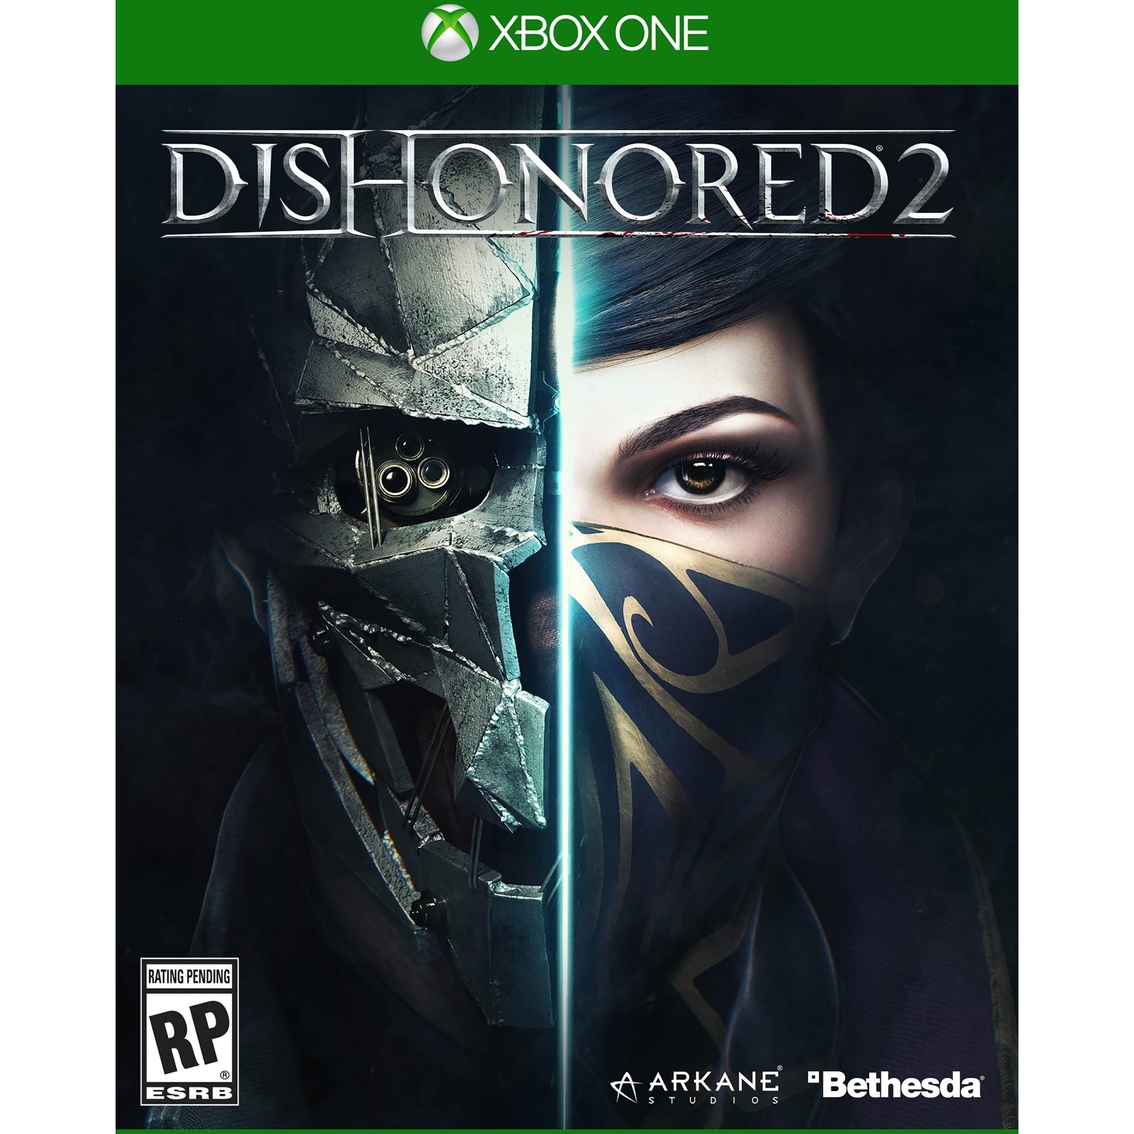 Dishonored 2 (Xbox One)